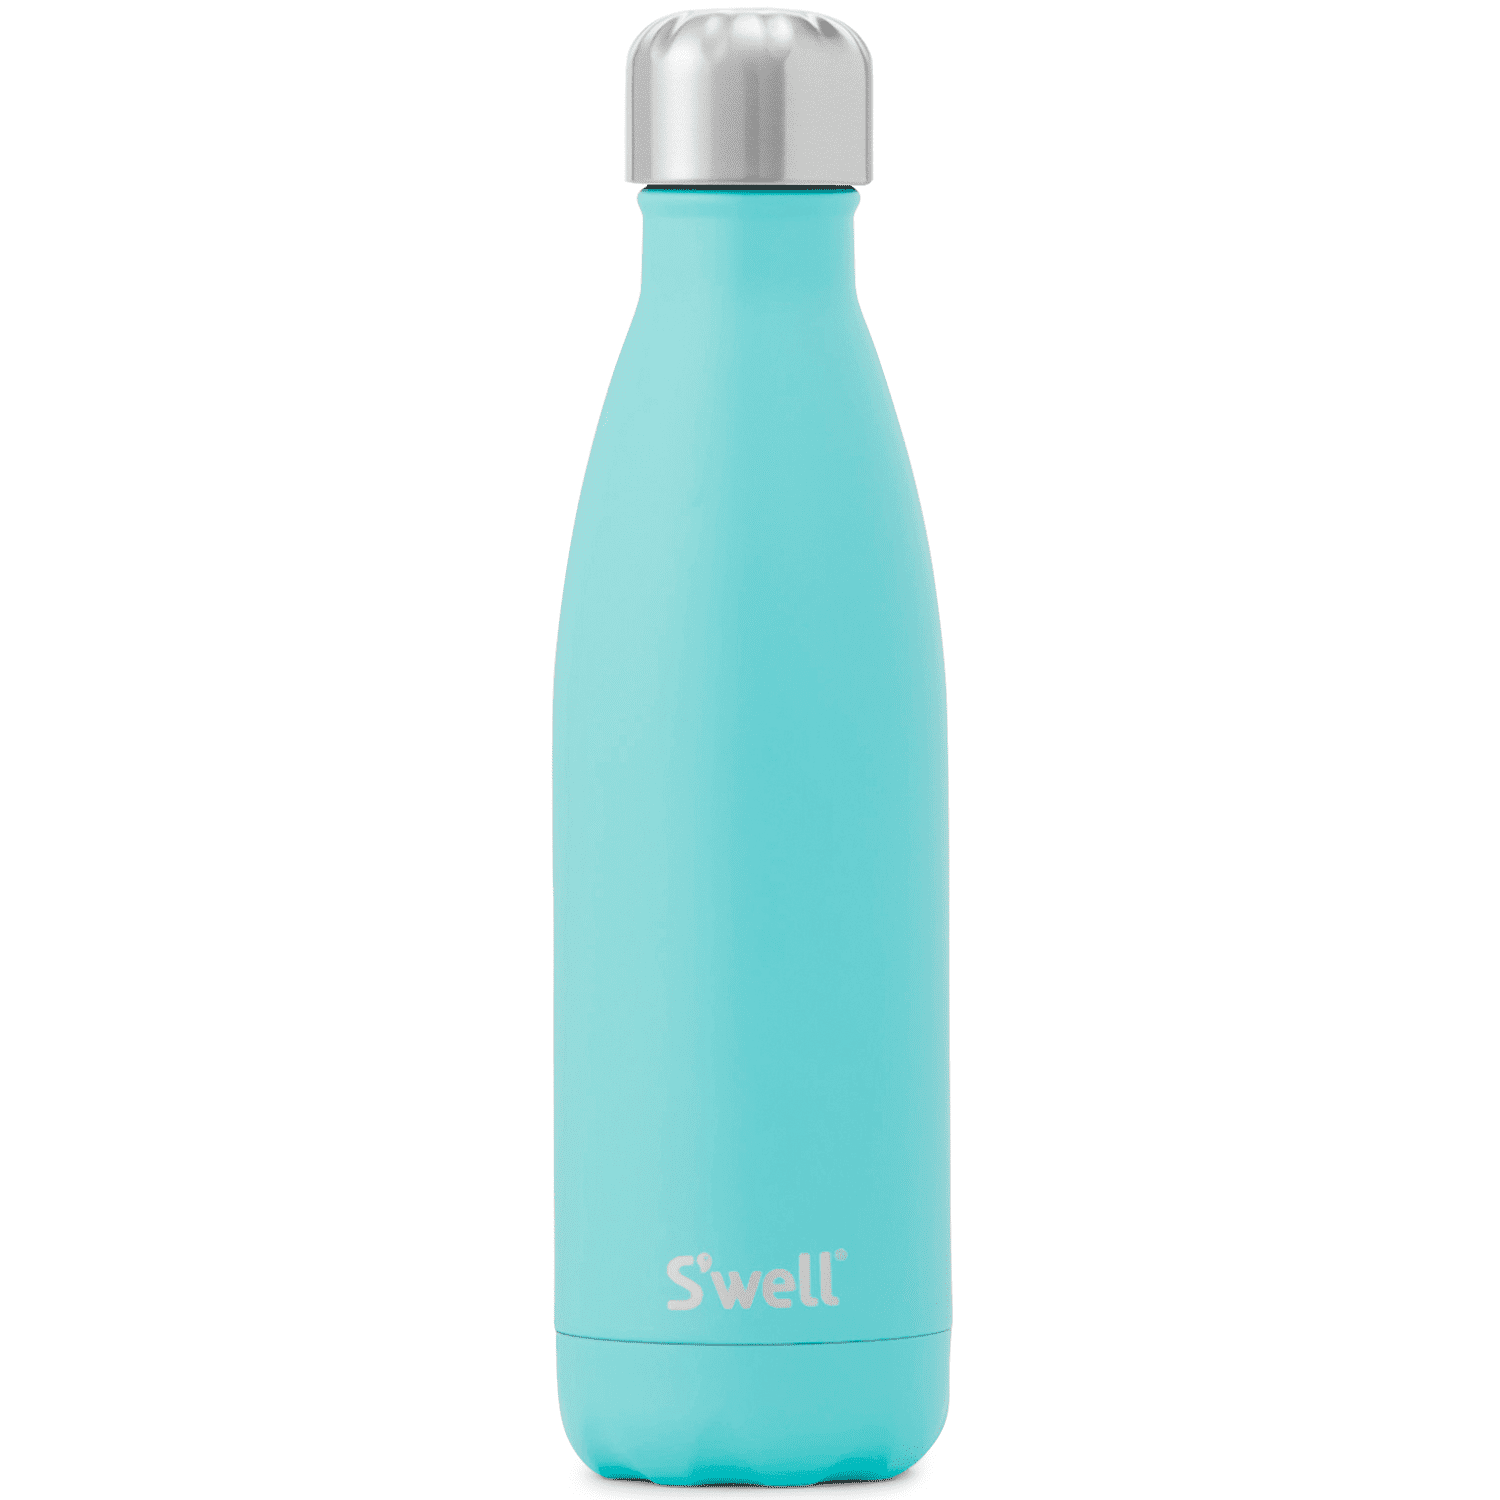 Hot Water Bottle by Sänger